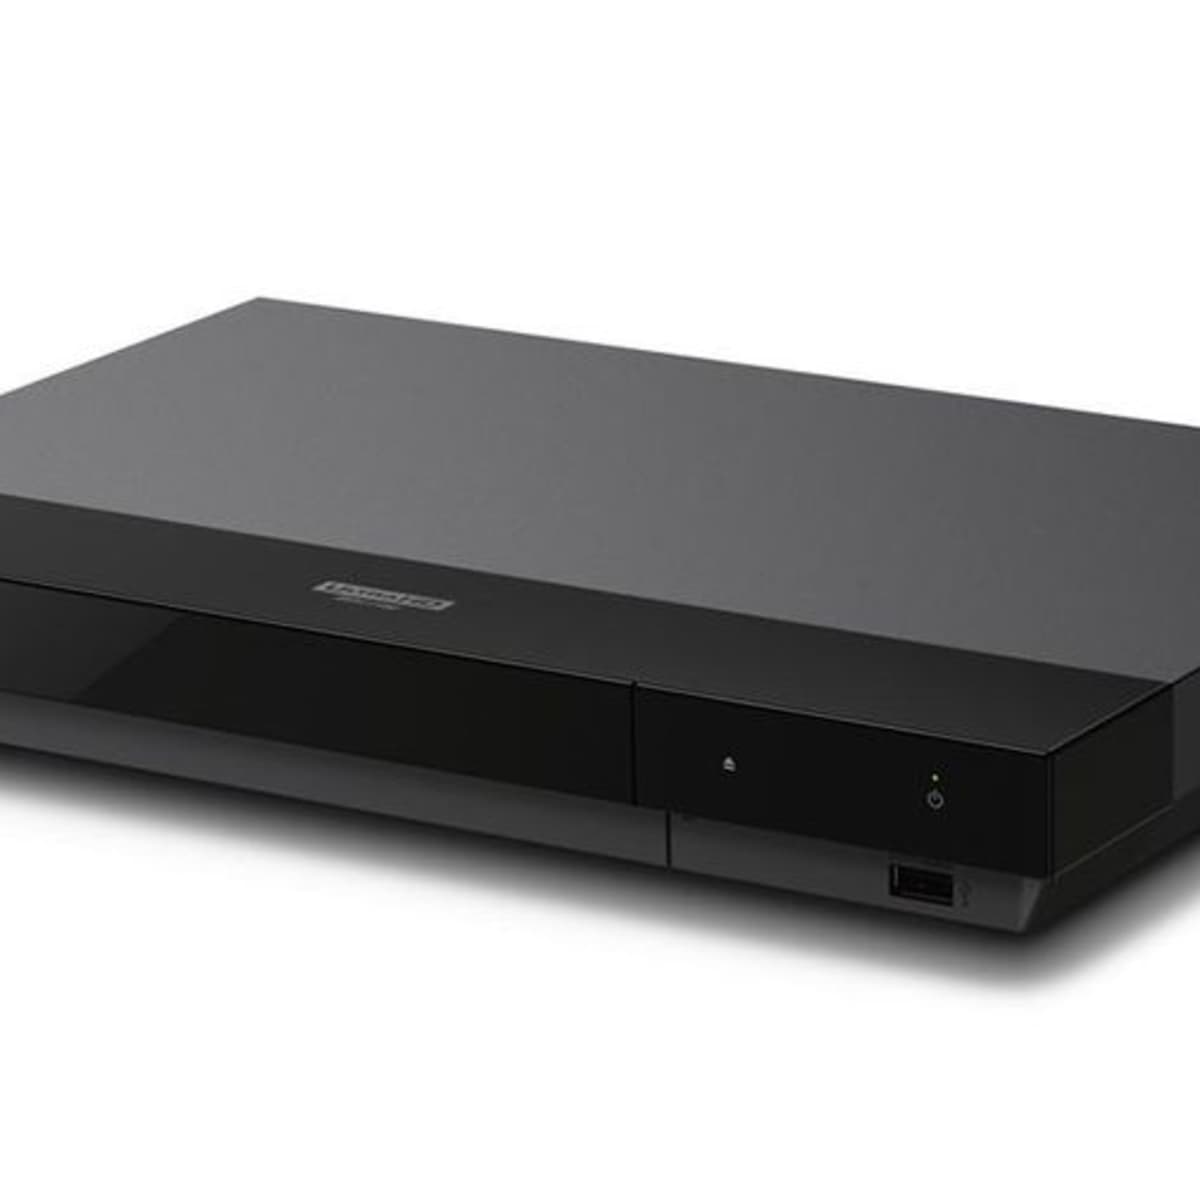 Sony UBP-X700 4K Ultra HD Blu-ray Player - Black for sale online